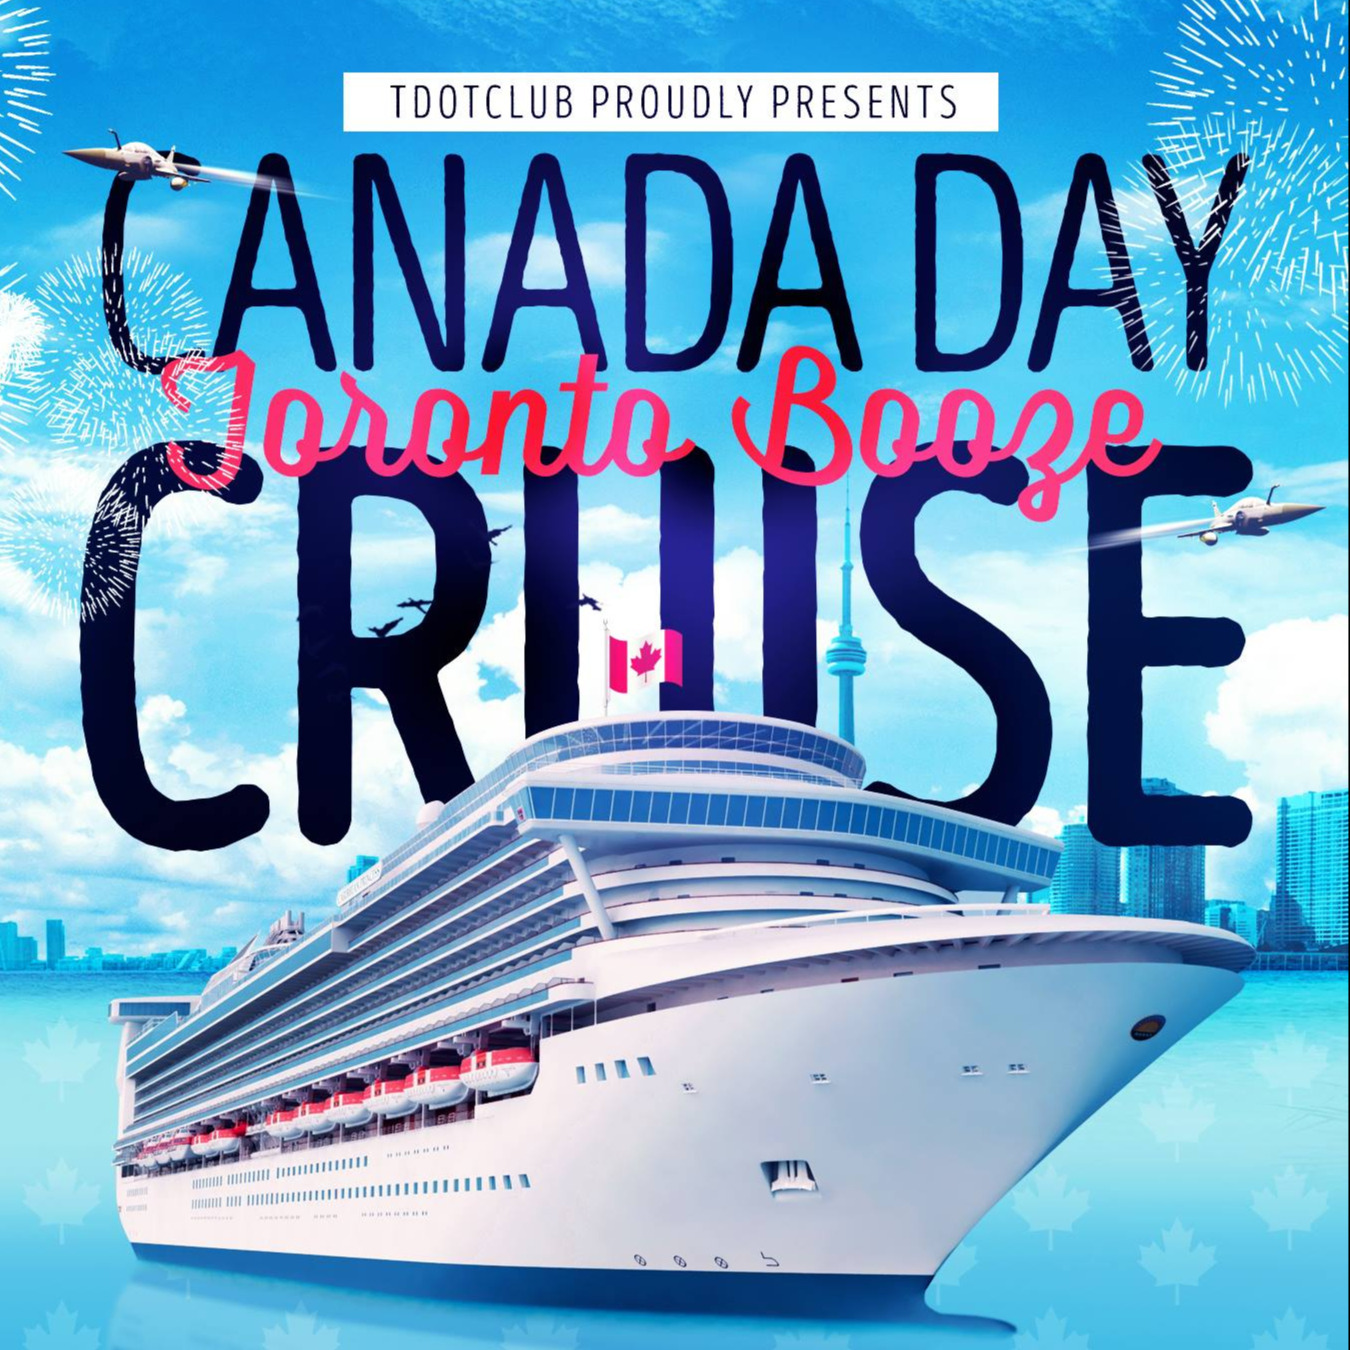 Tdotclub Canada Day Booze Cruise 2022 